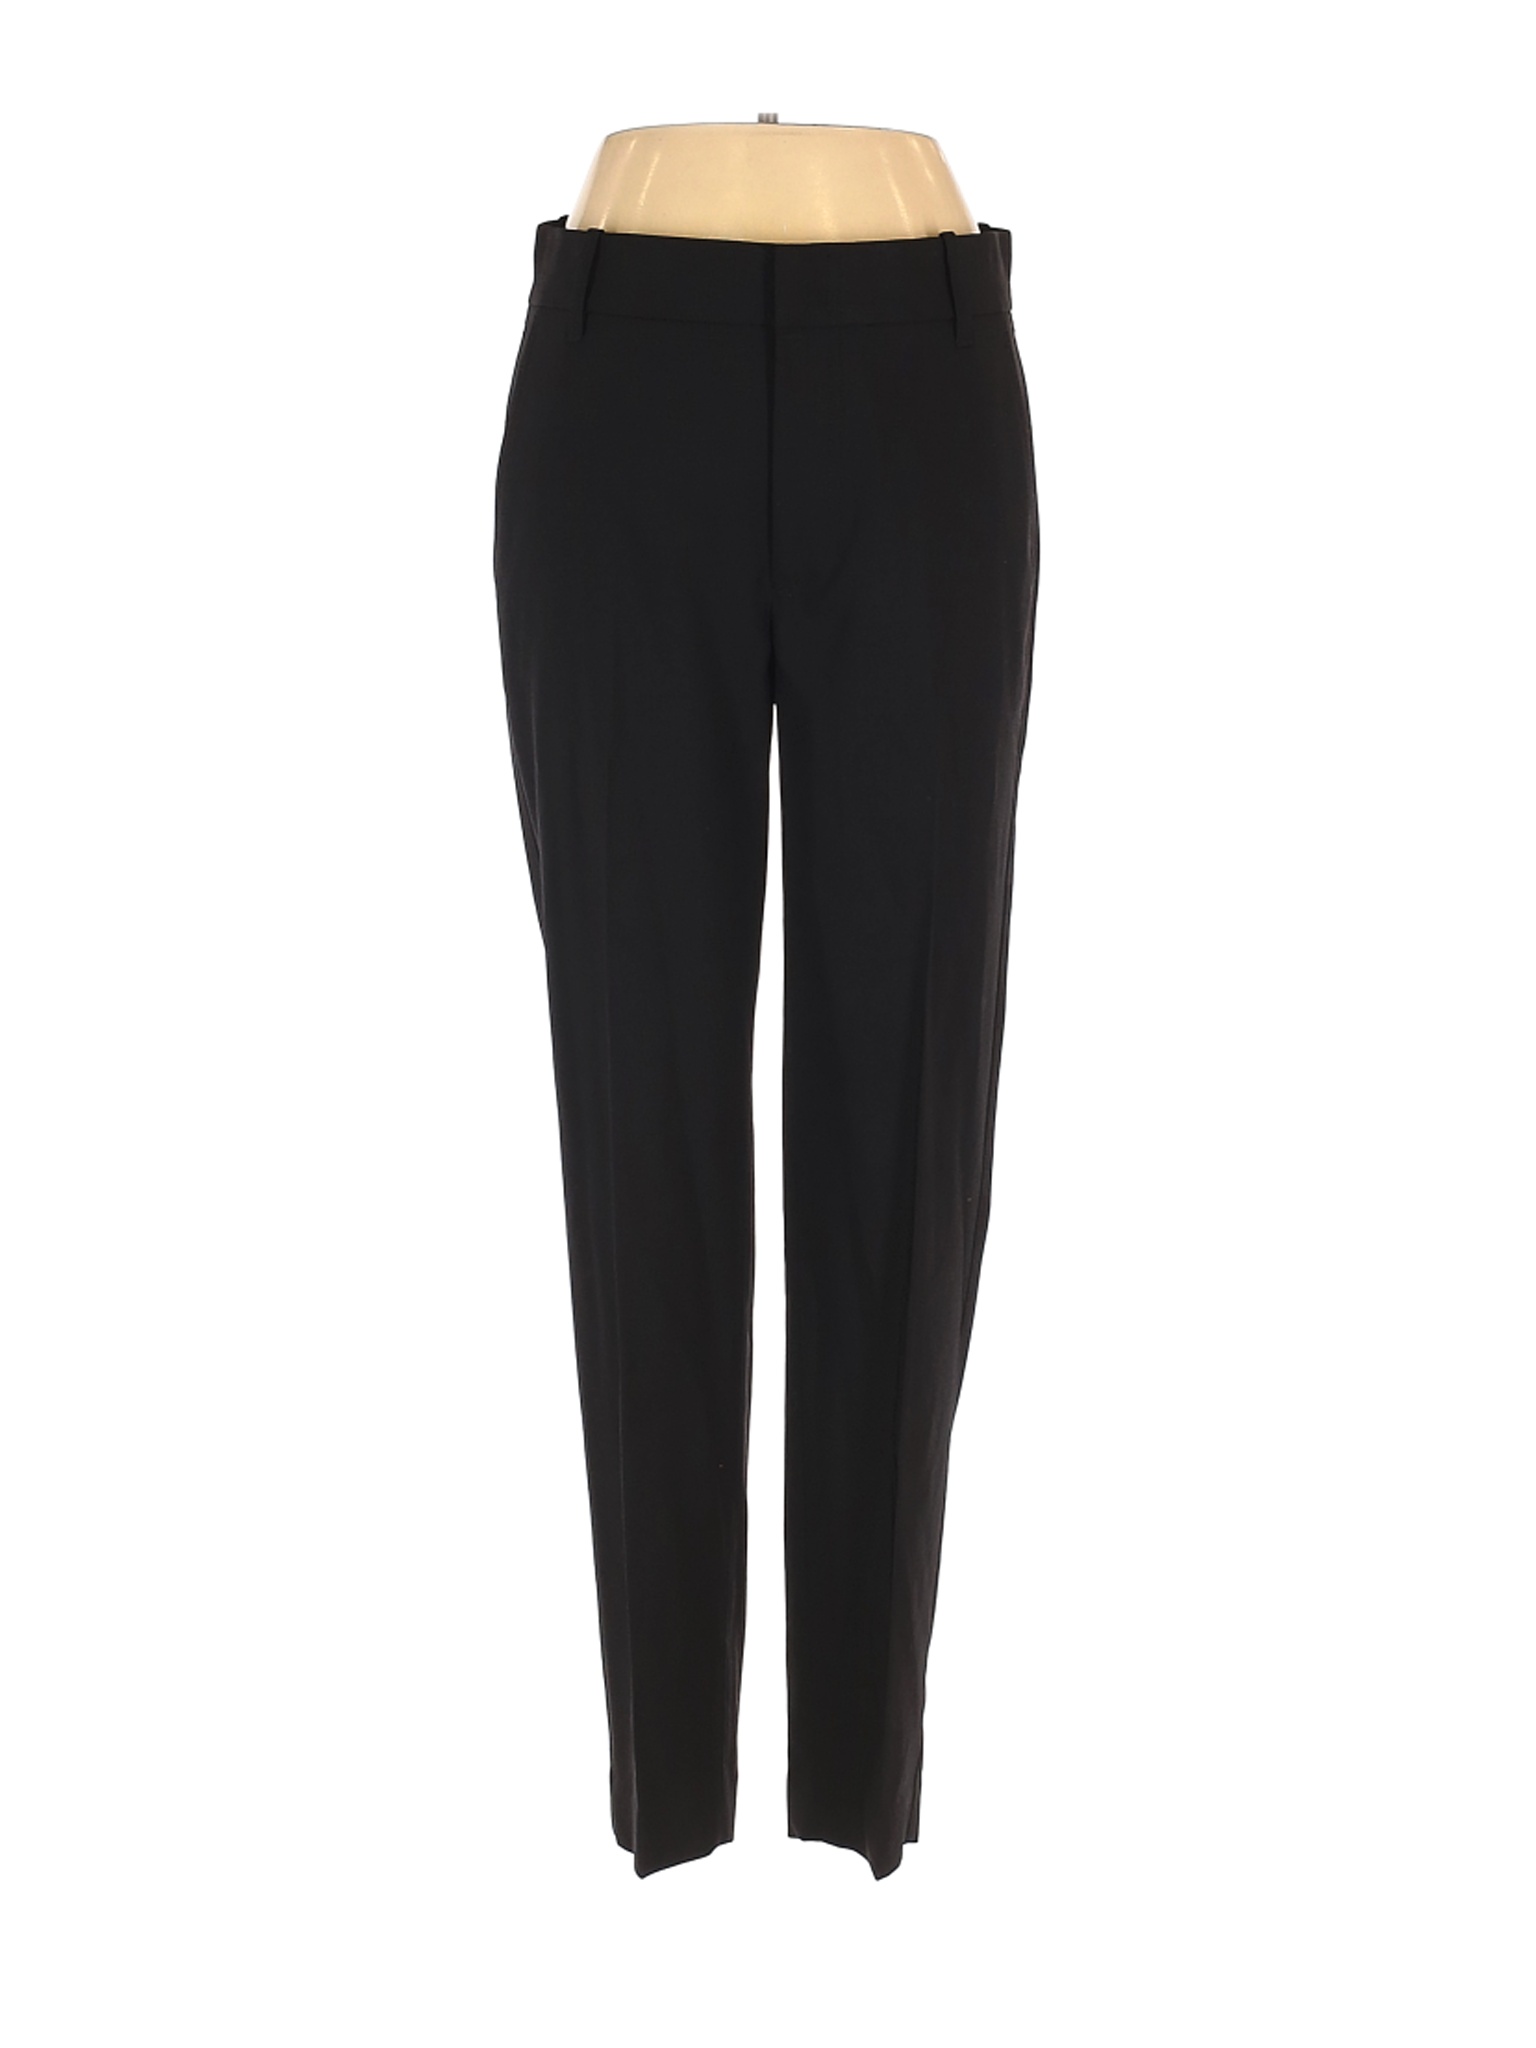 Vince. Women Black Dress Pants 4 | eBay